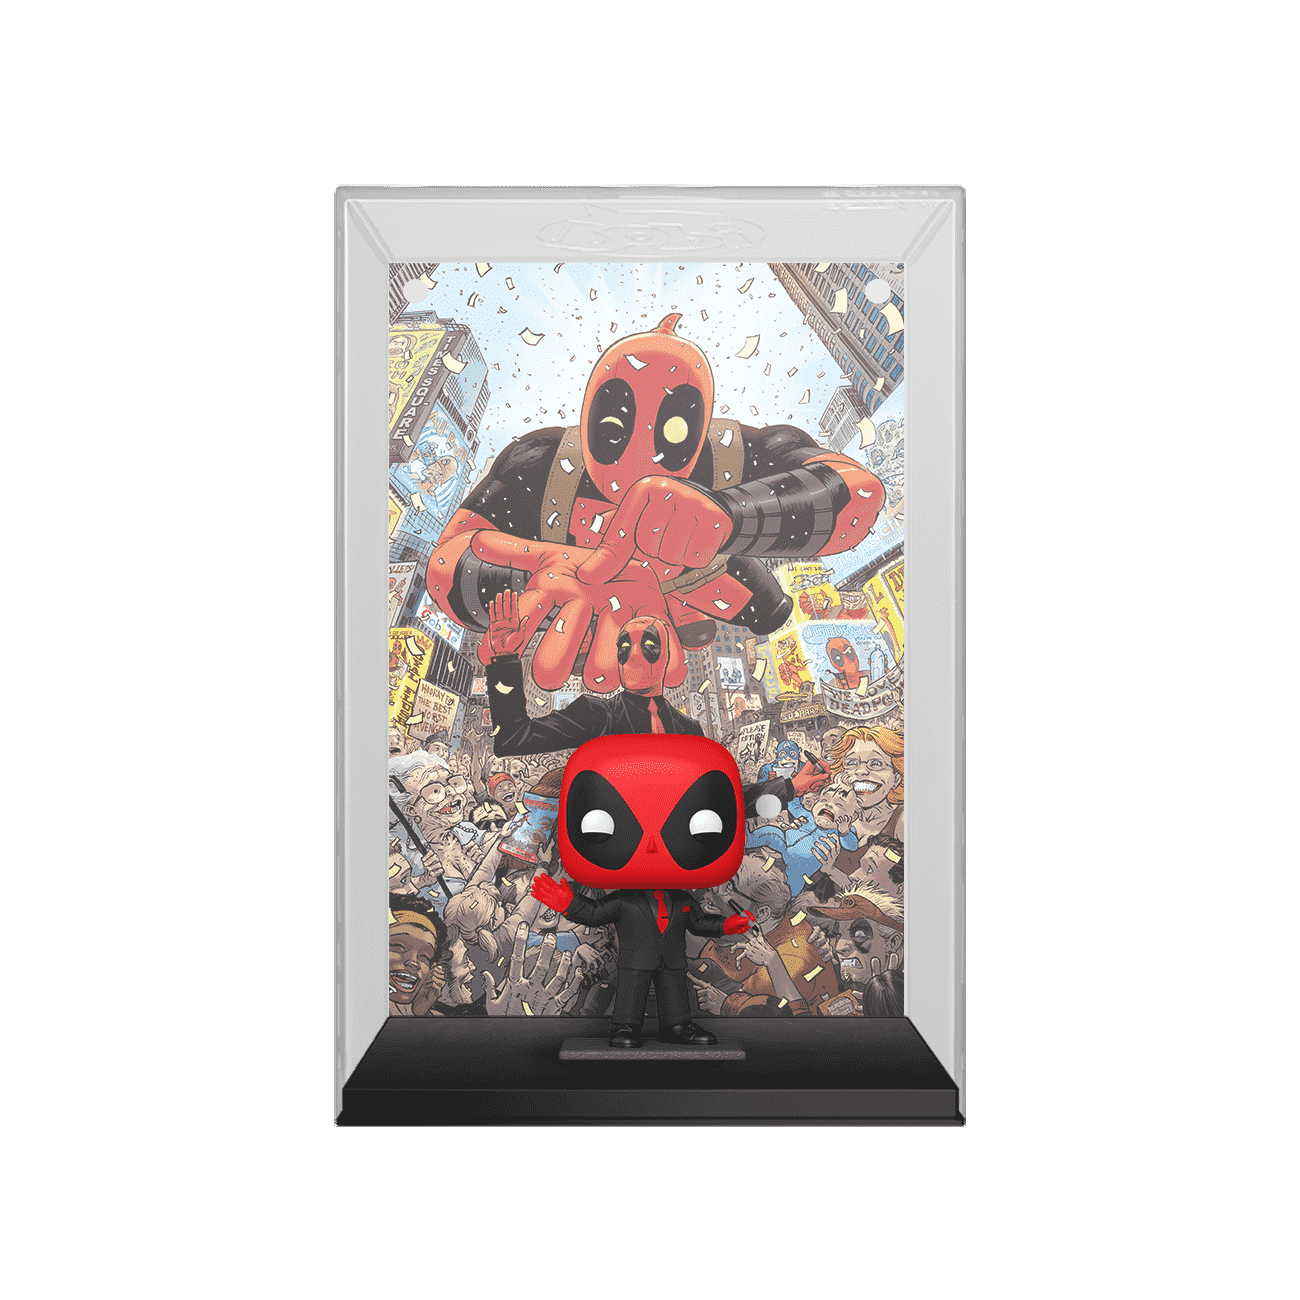 Buy Pop! Comic Covers Deadpool: World's Greatest Comic Magazine #1